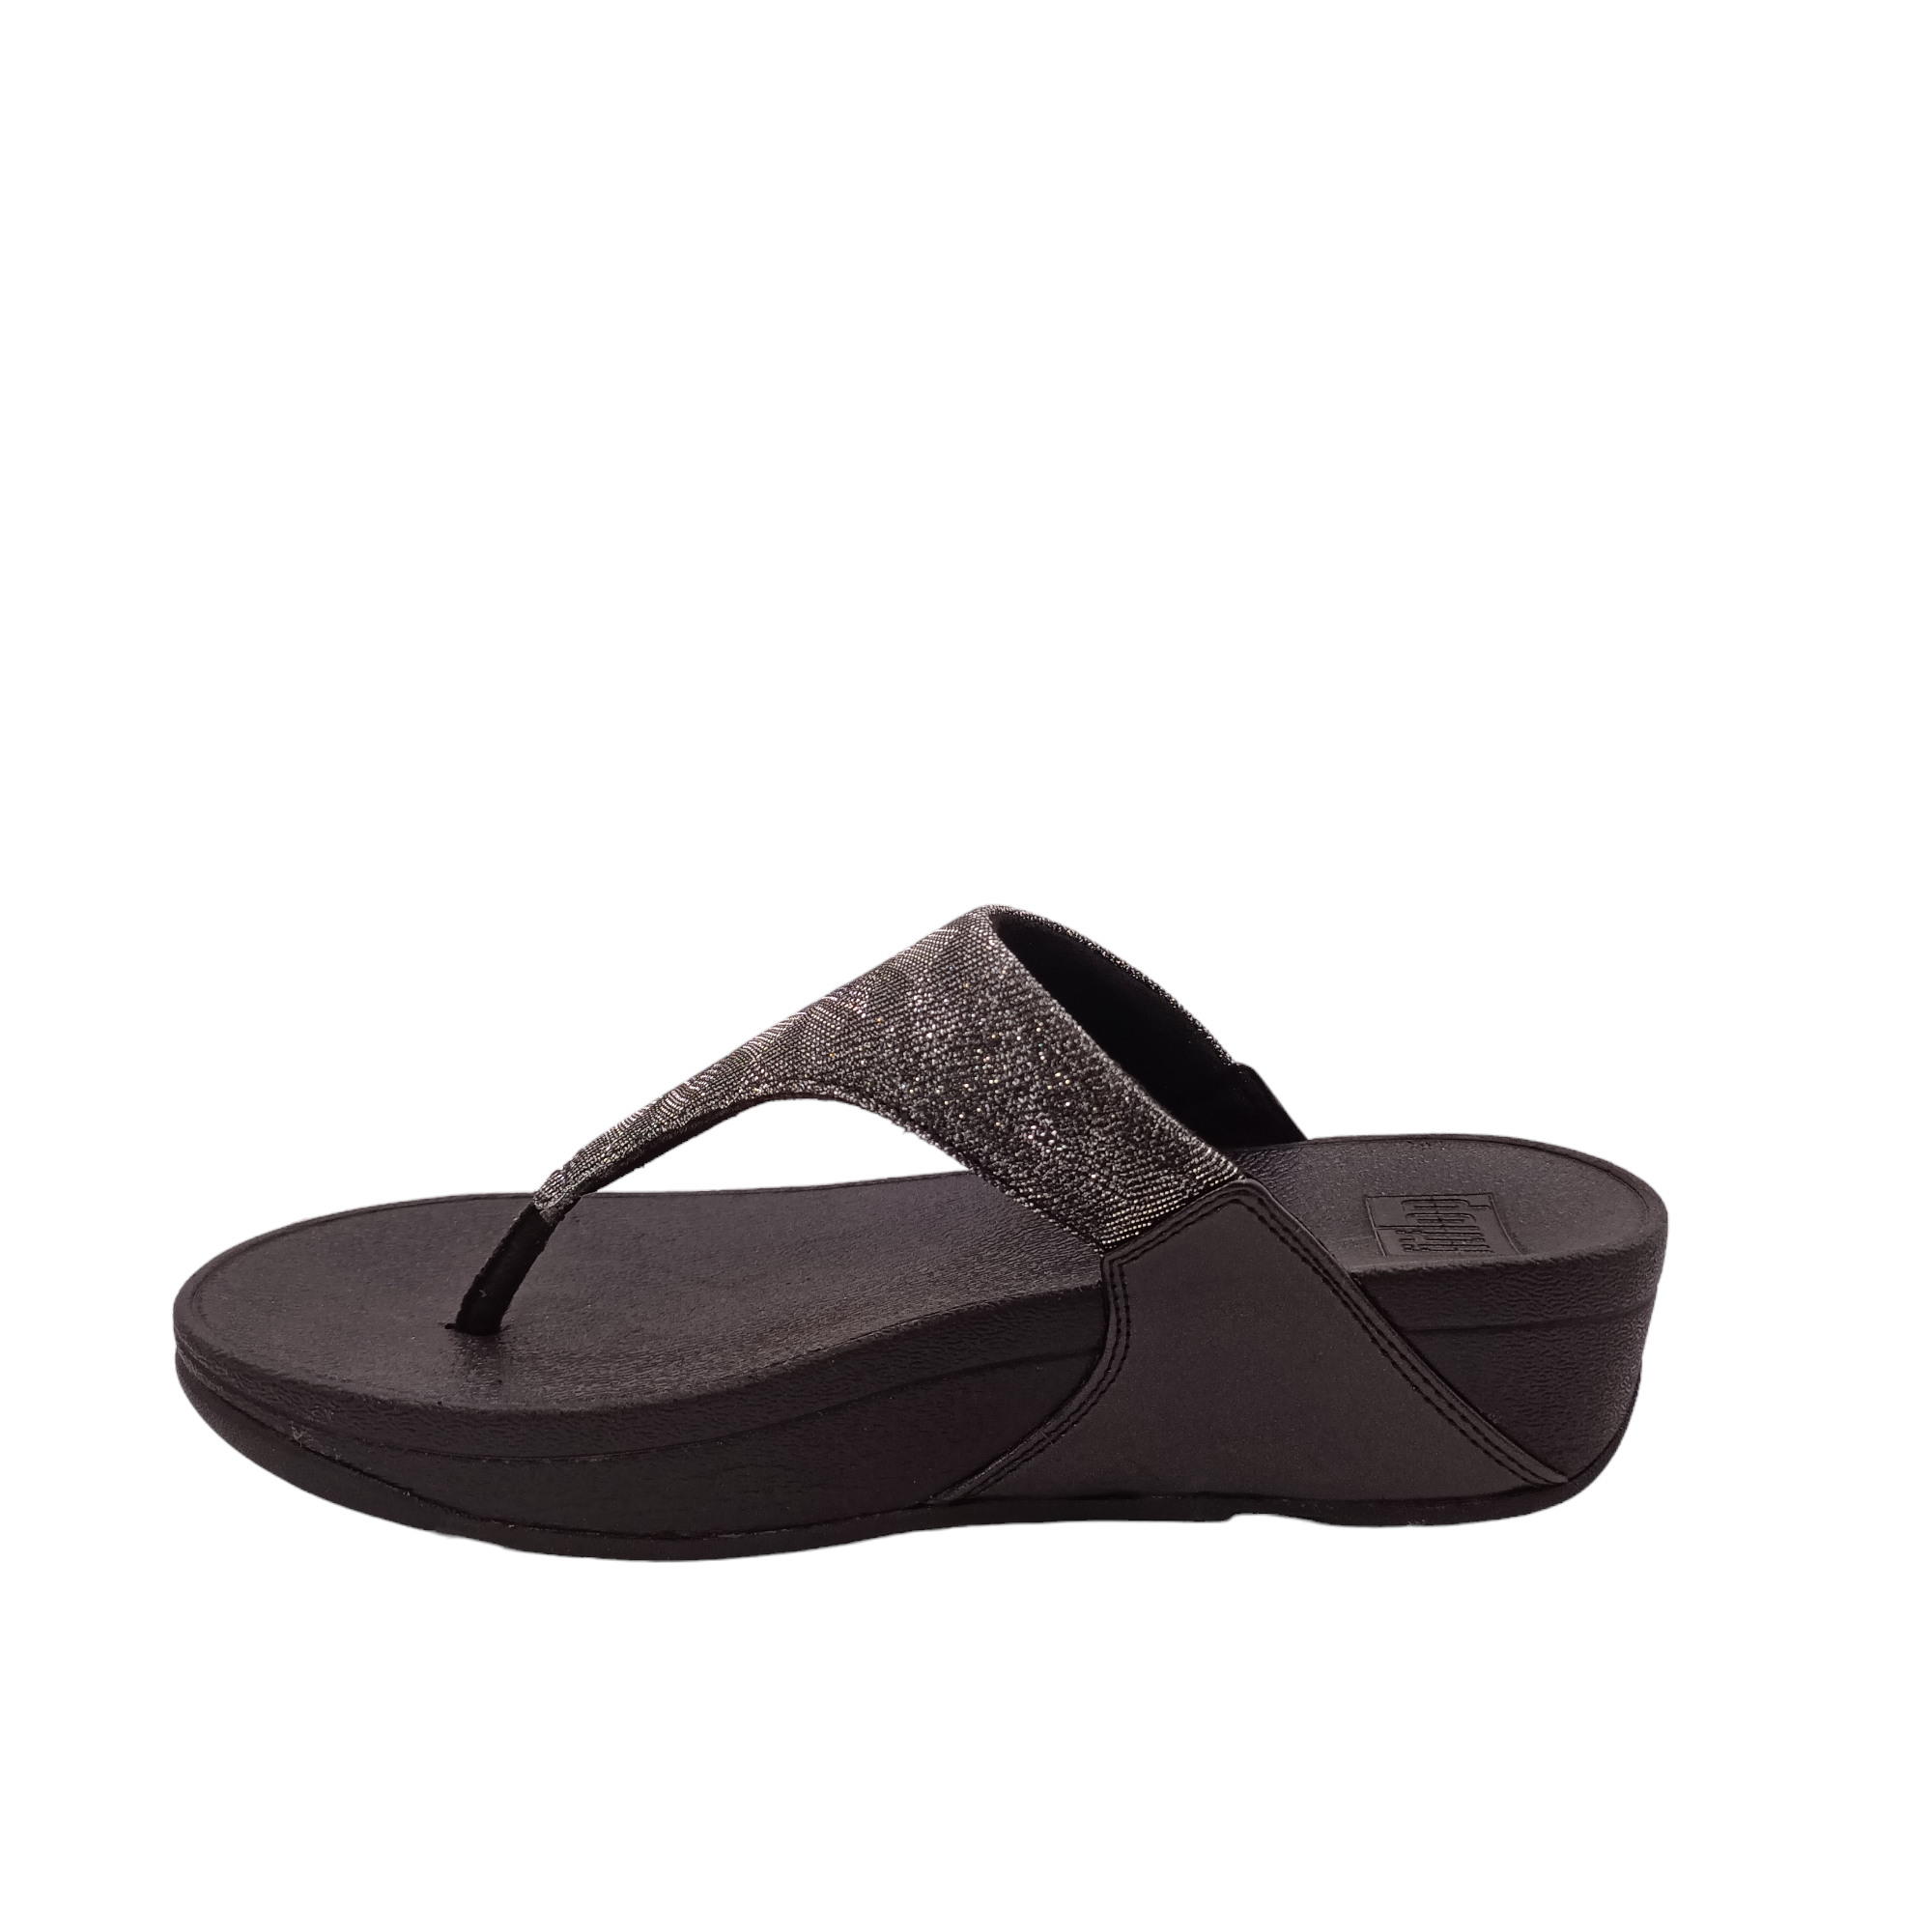 Lulu Glitz Toe-Post Sandal - shoe&amp;me - fitflop - Jandal - Jandals, Platform, Summer, Womens